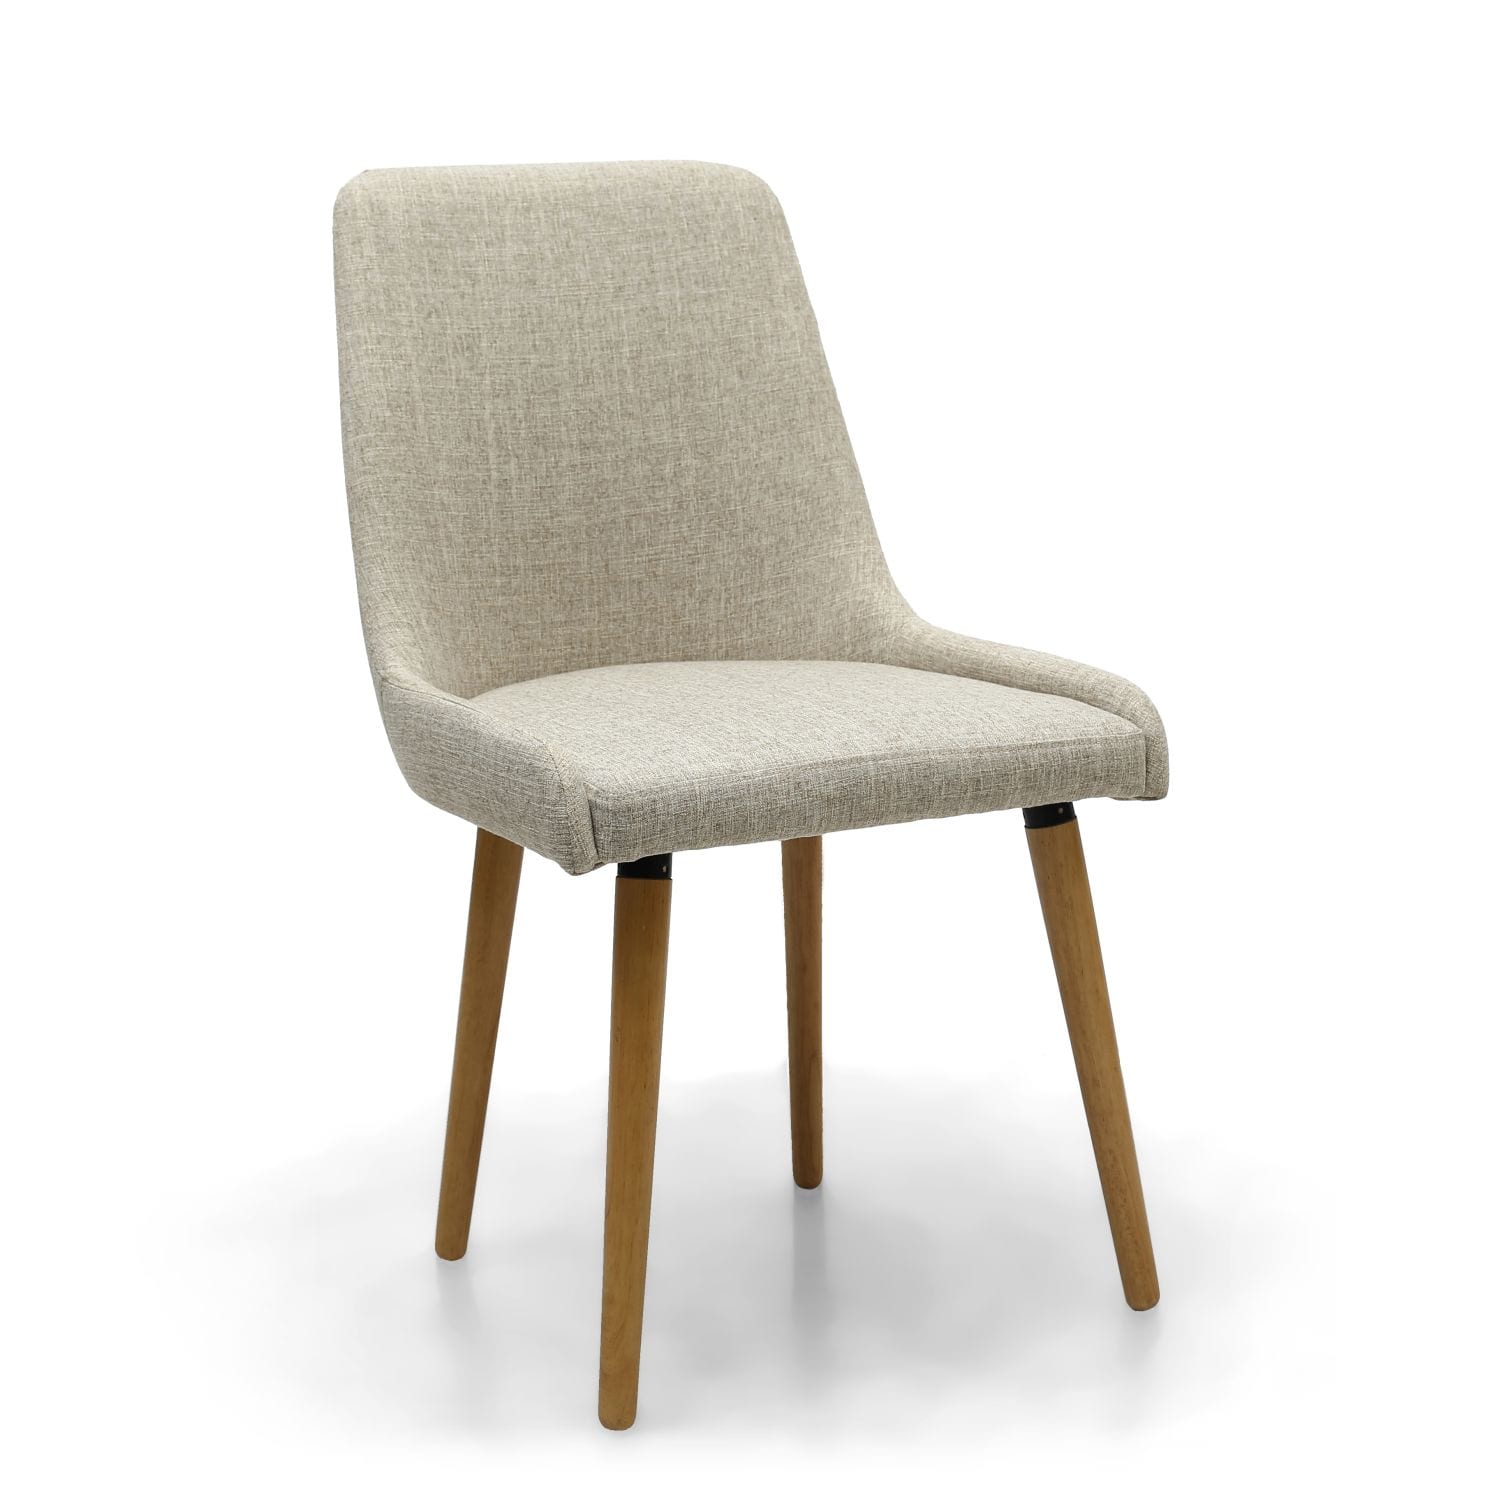 CapriCorisn Flax Effect Dining Chair